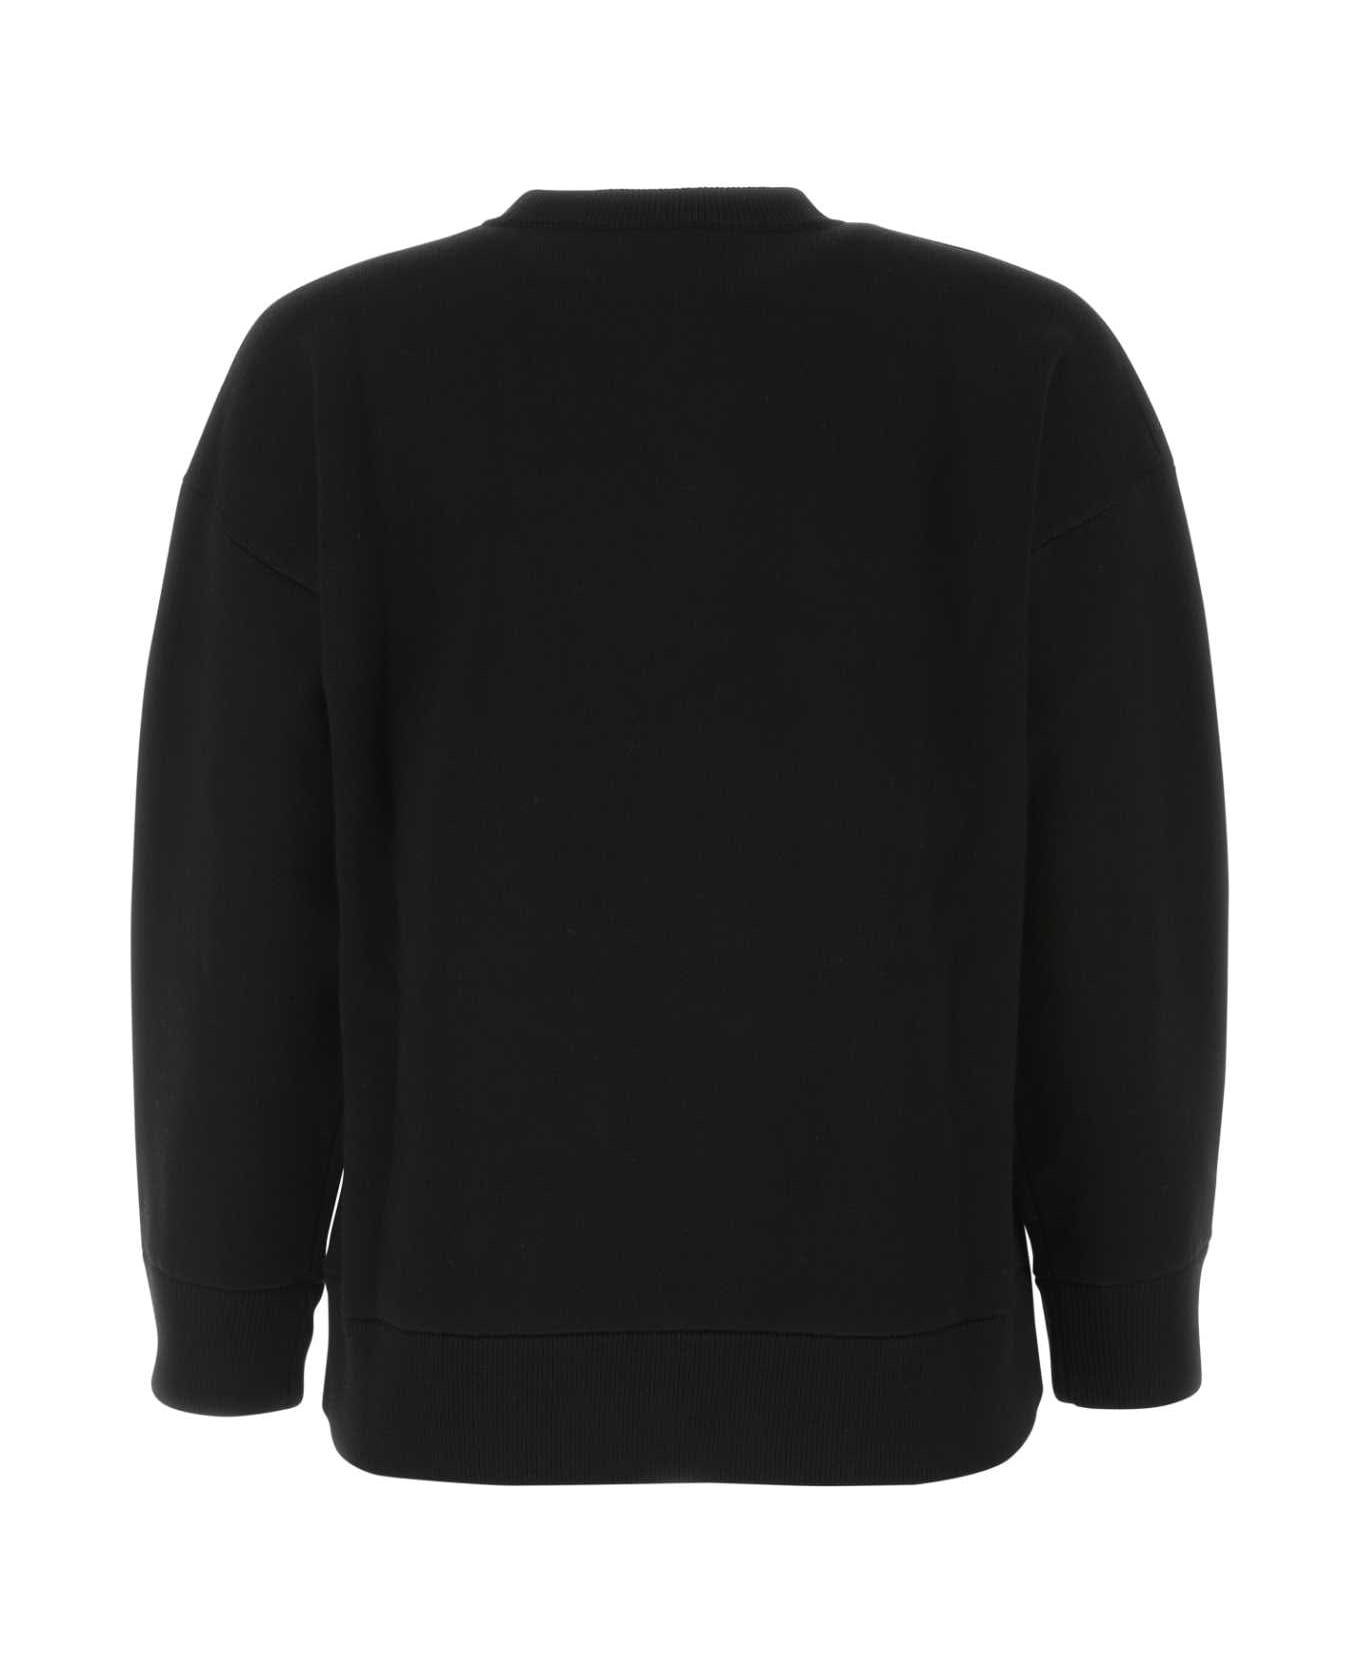 Burberry Black Stretch Wool Blend Sweater - A1189 フリース